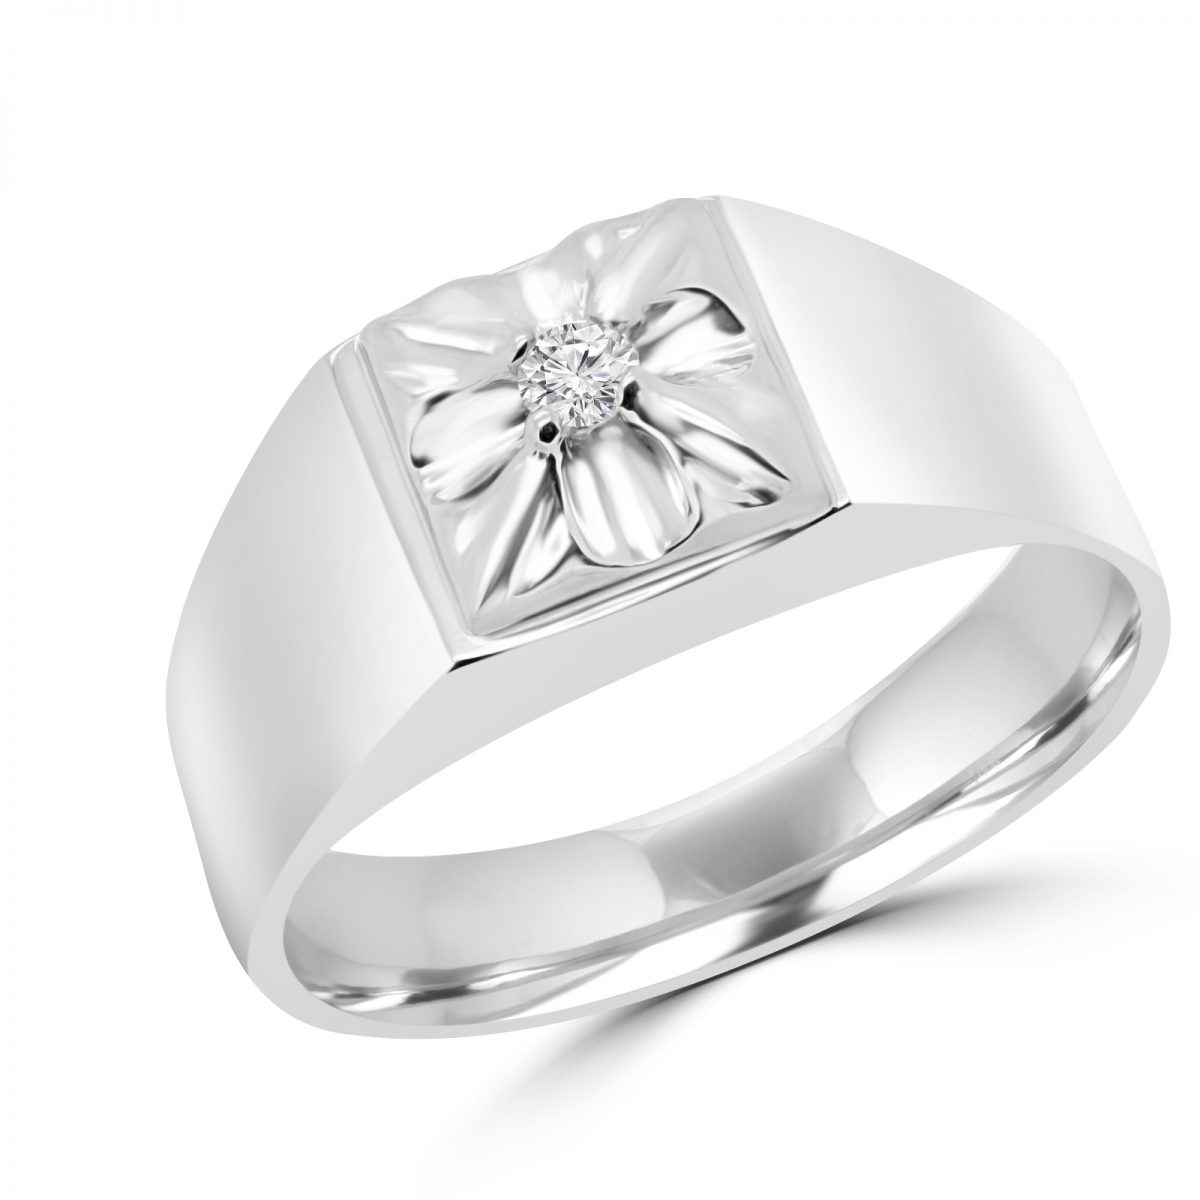 Men’s wedding diamond ring 0.06 (ctw) in white gold